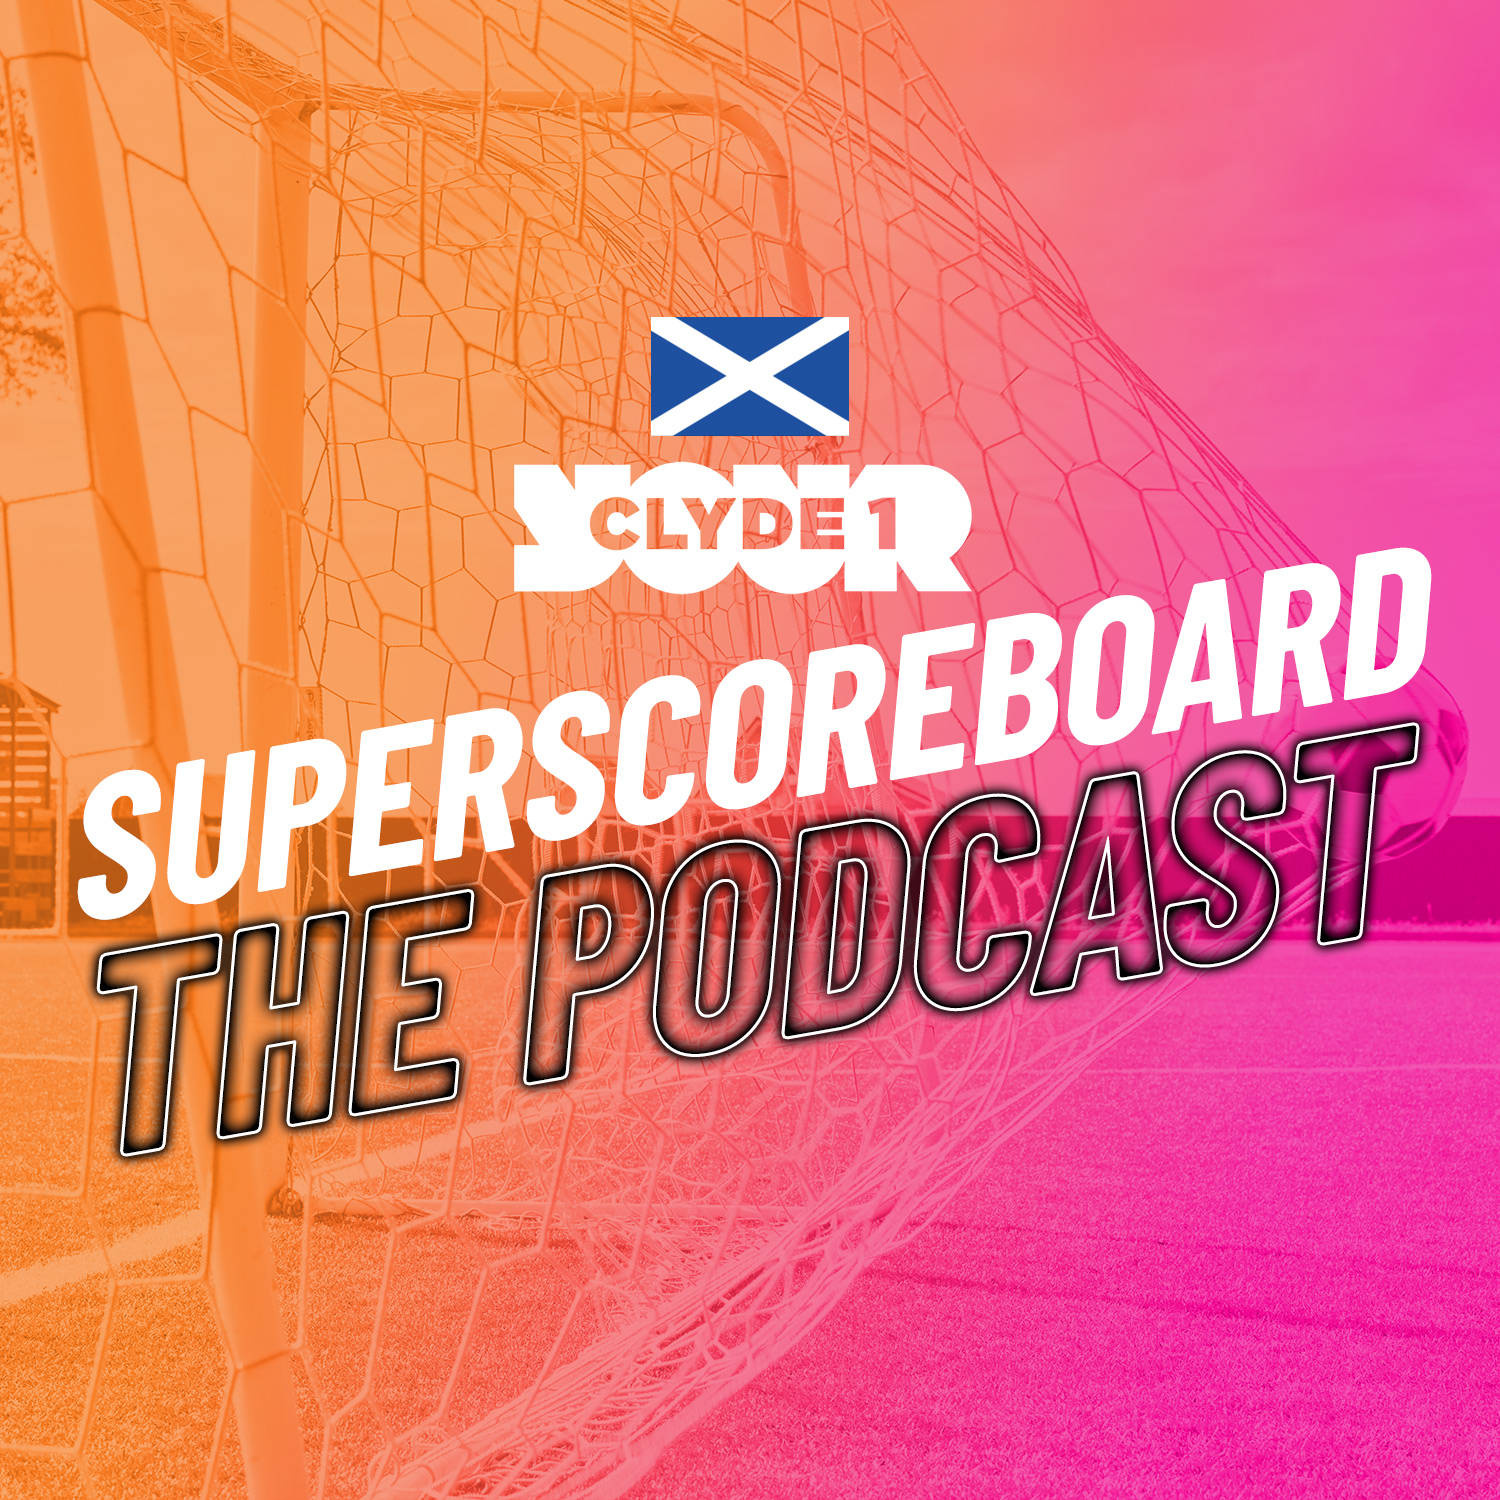 Thursday 28th December Clyde 1 Superscoreboard